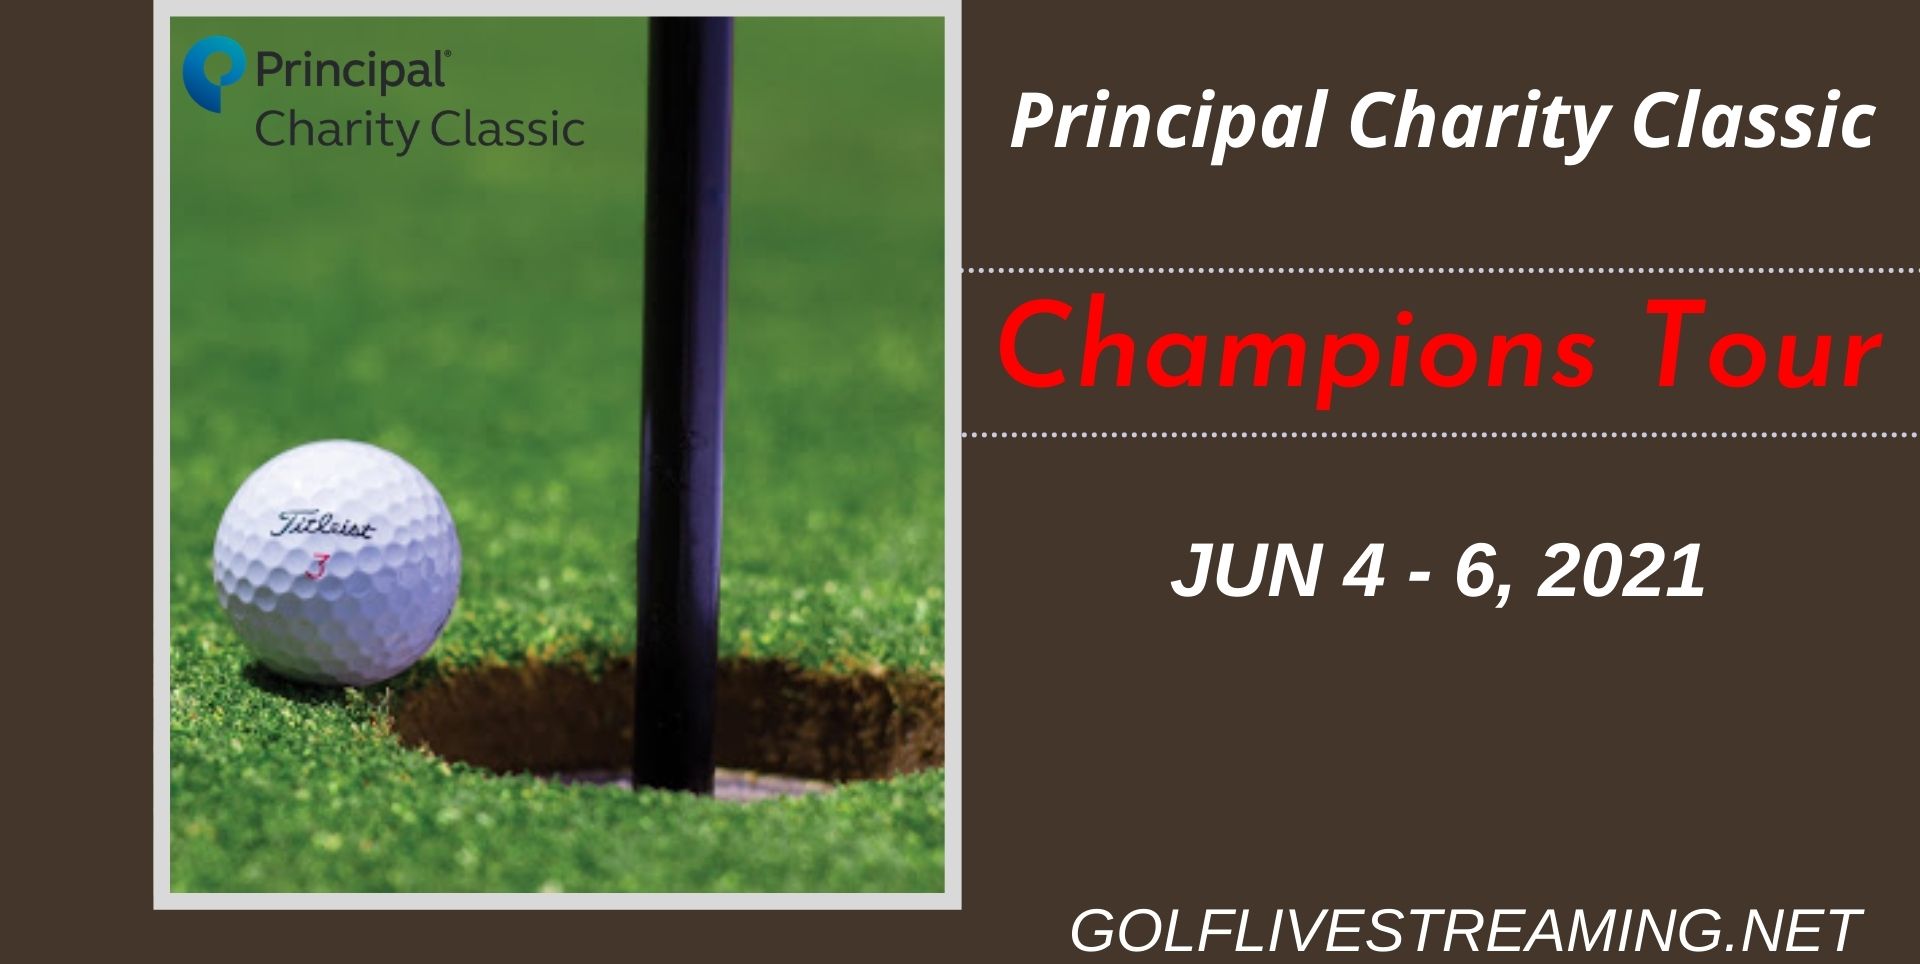 Principal Charity Classic Golf Live Online